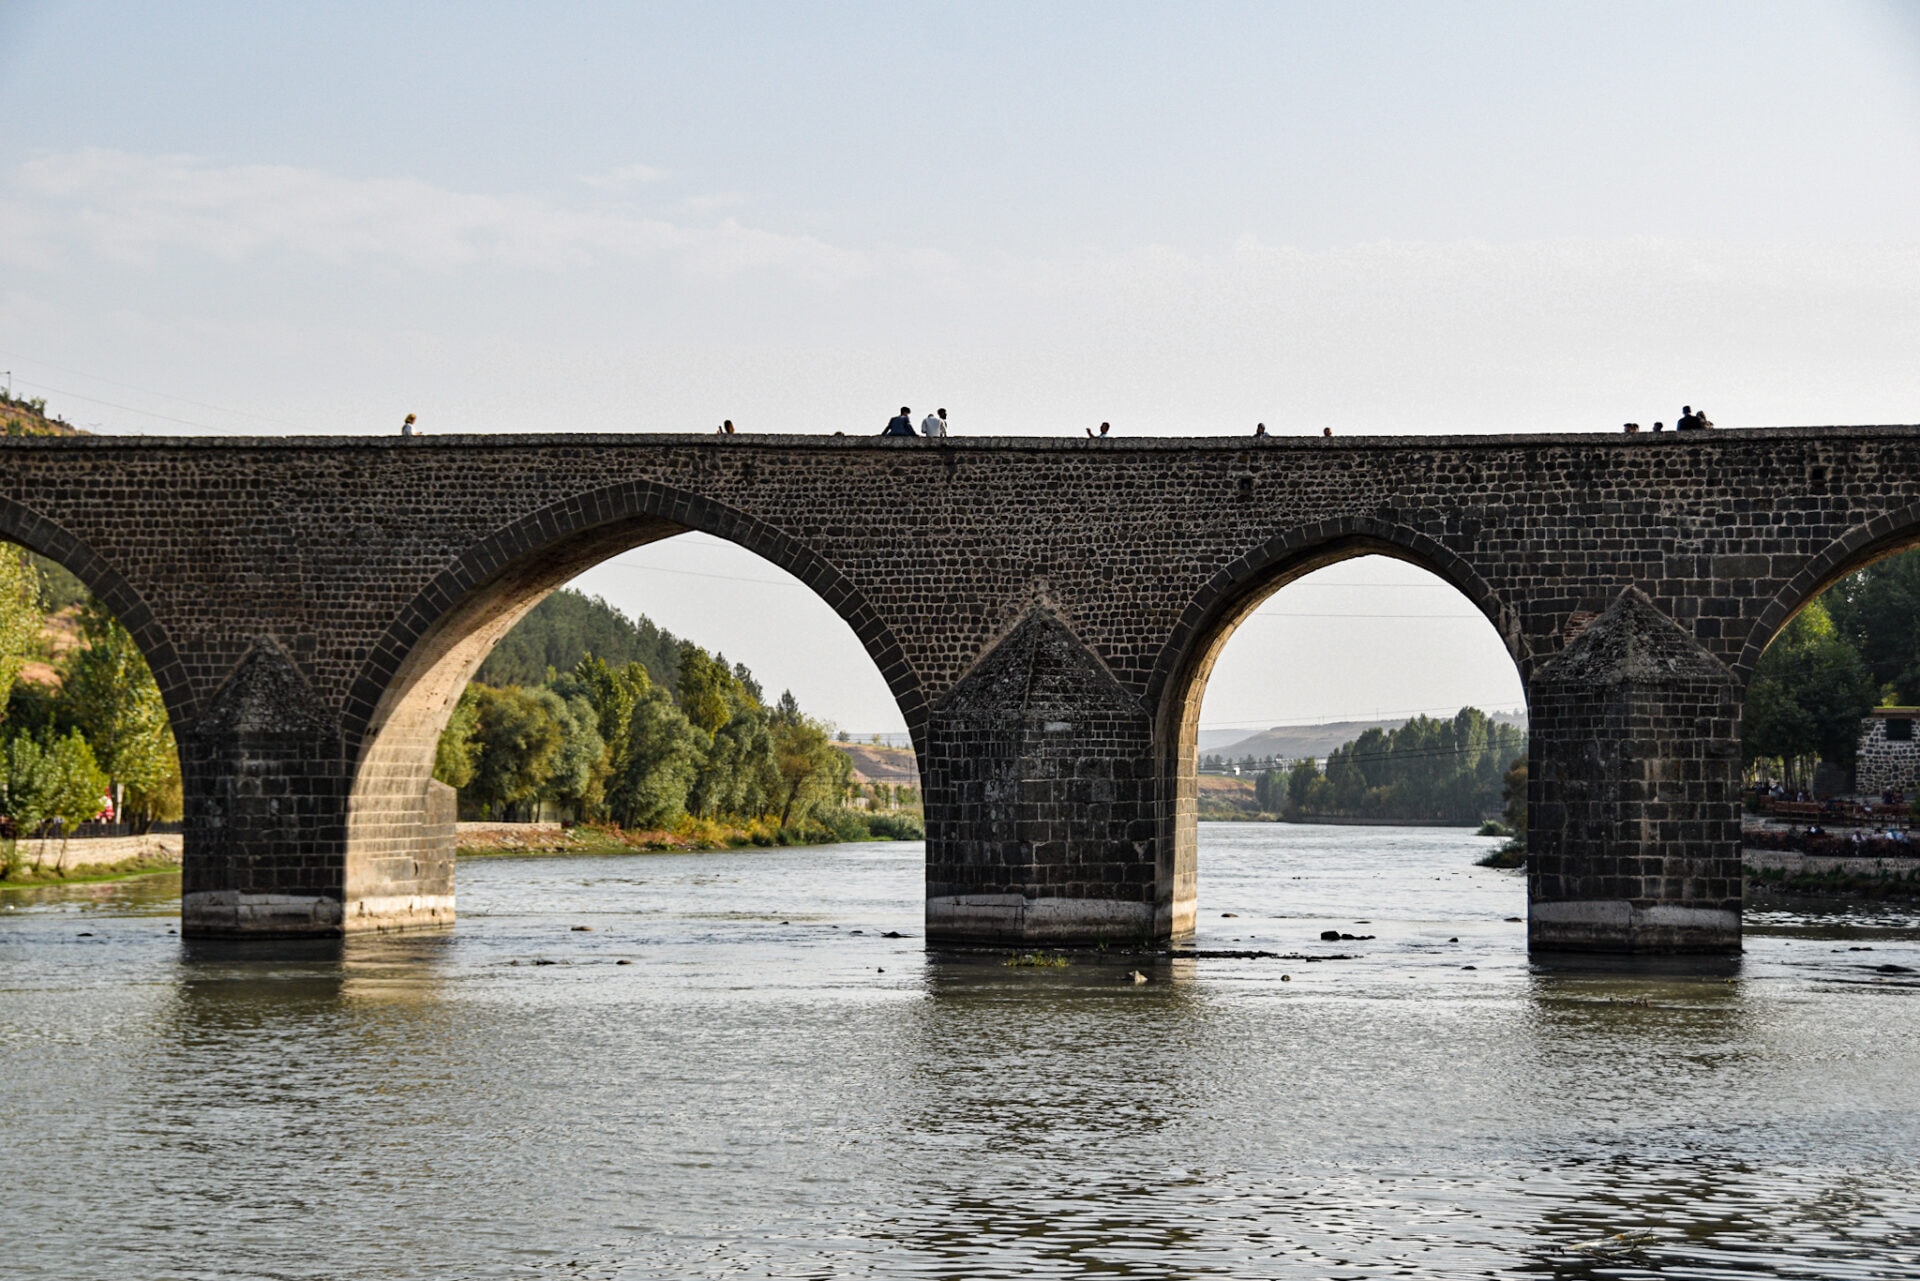 "Ten Arches Bridge" spanning the mighty Tigris river near Diyarbakir